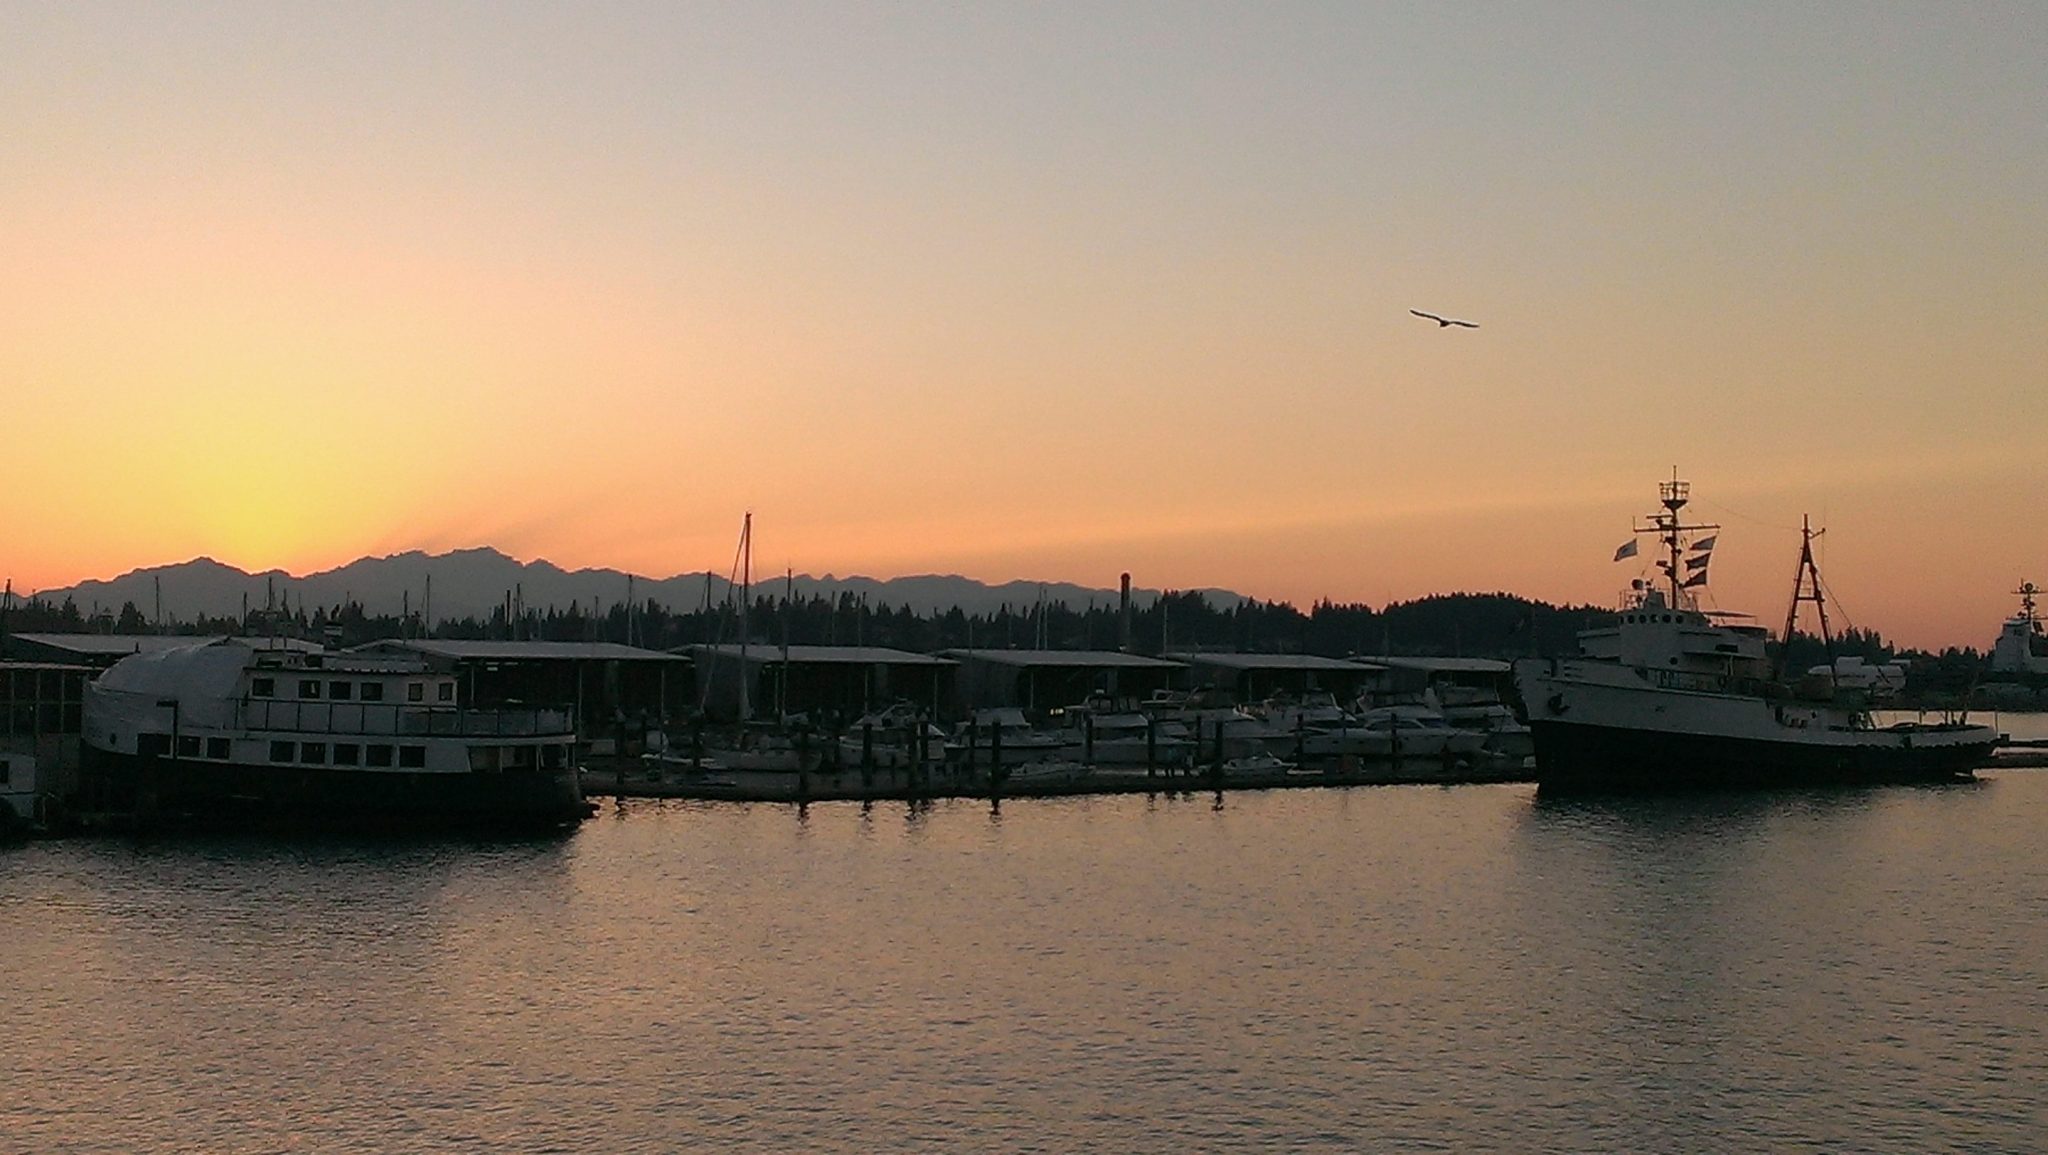 Beautiful sunset at the dock